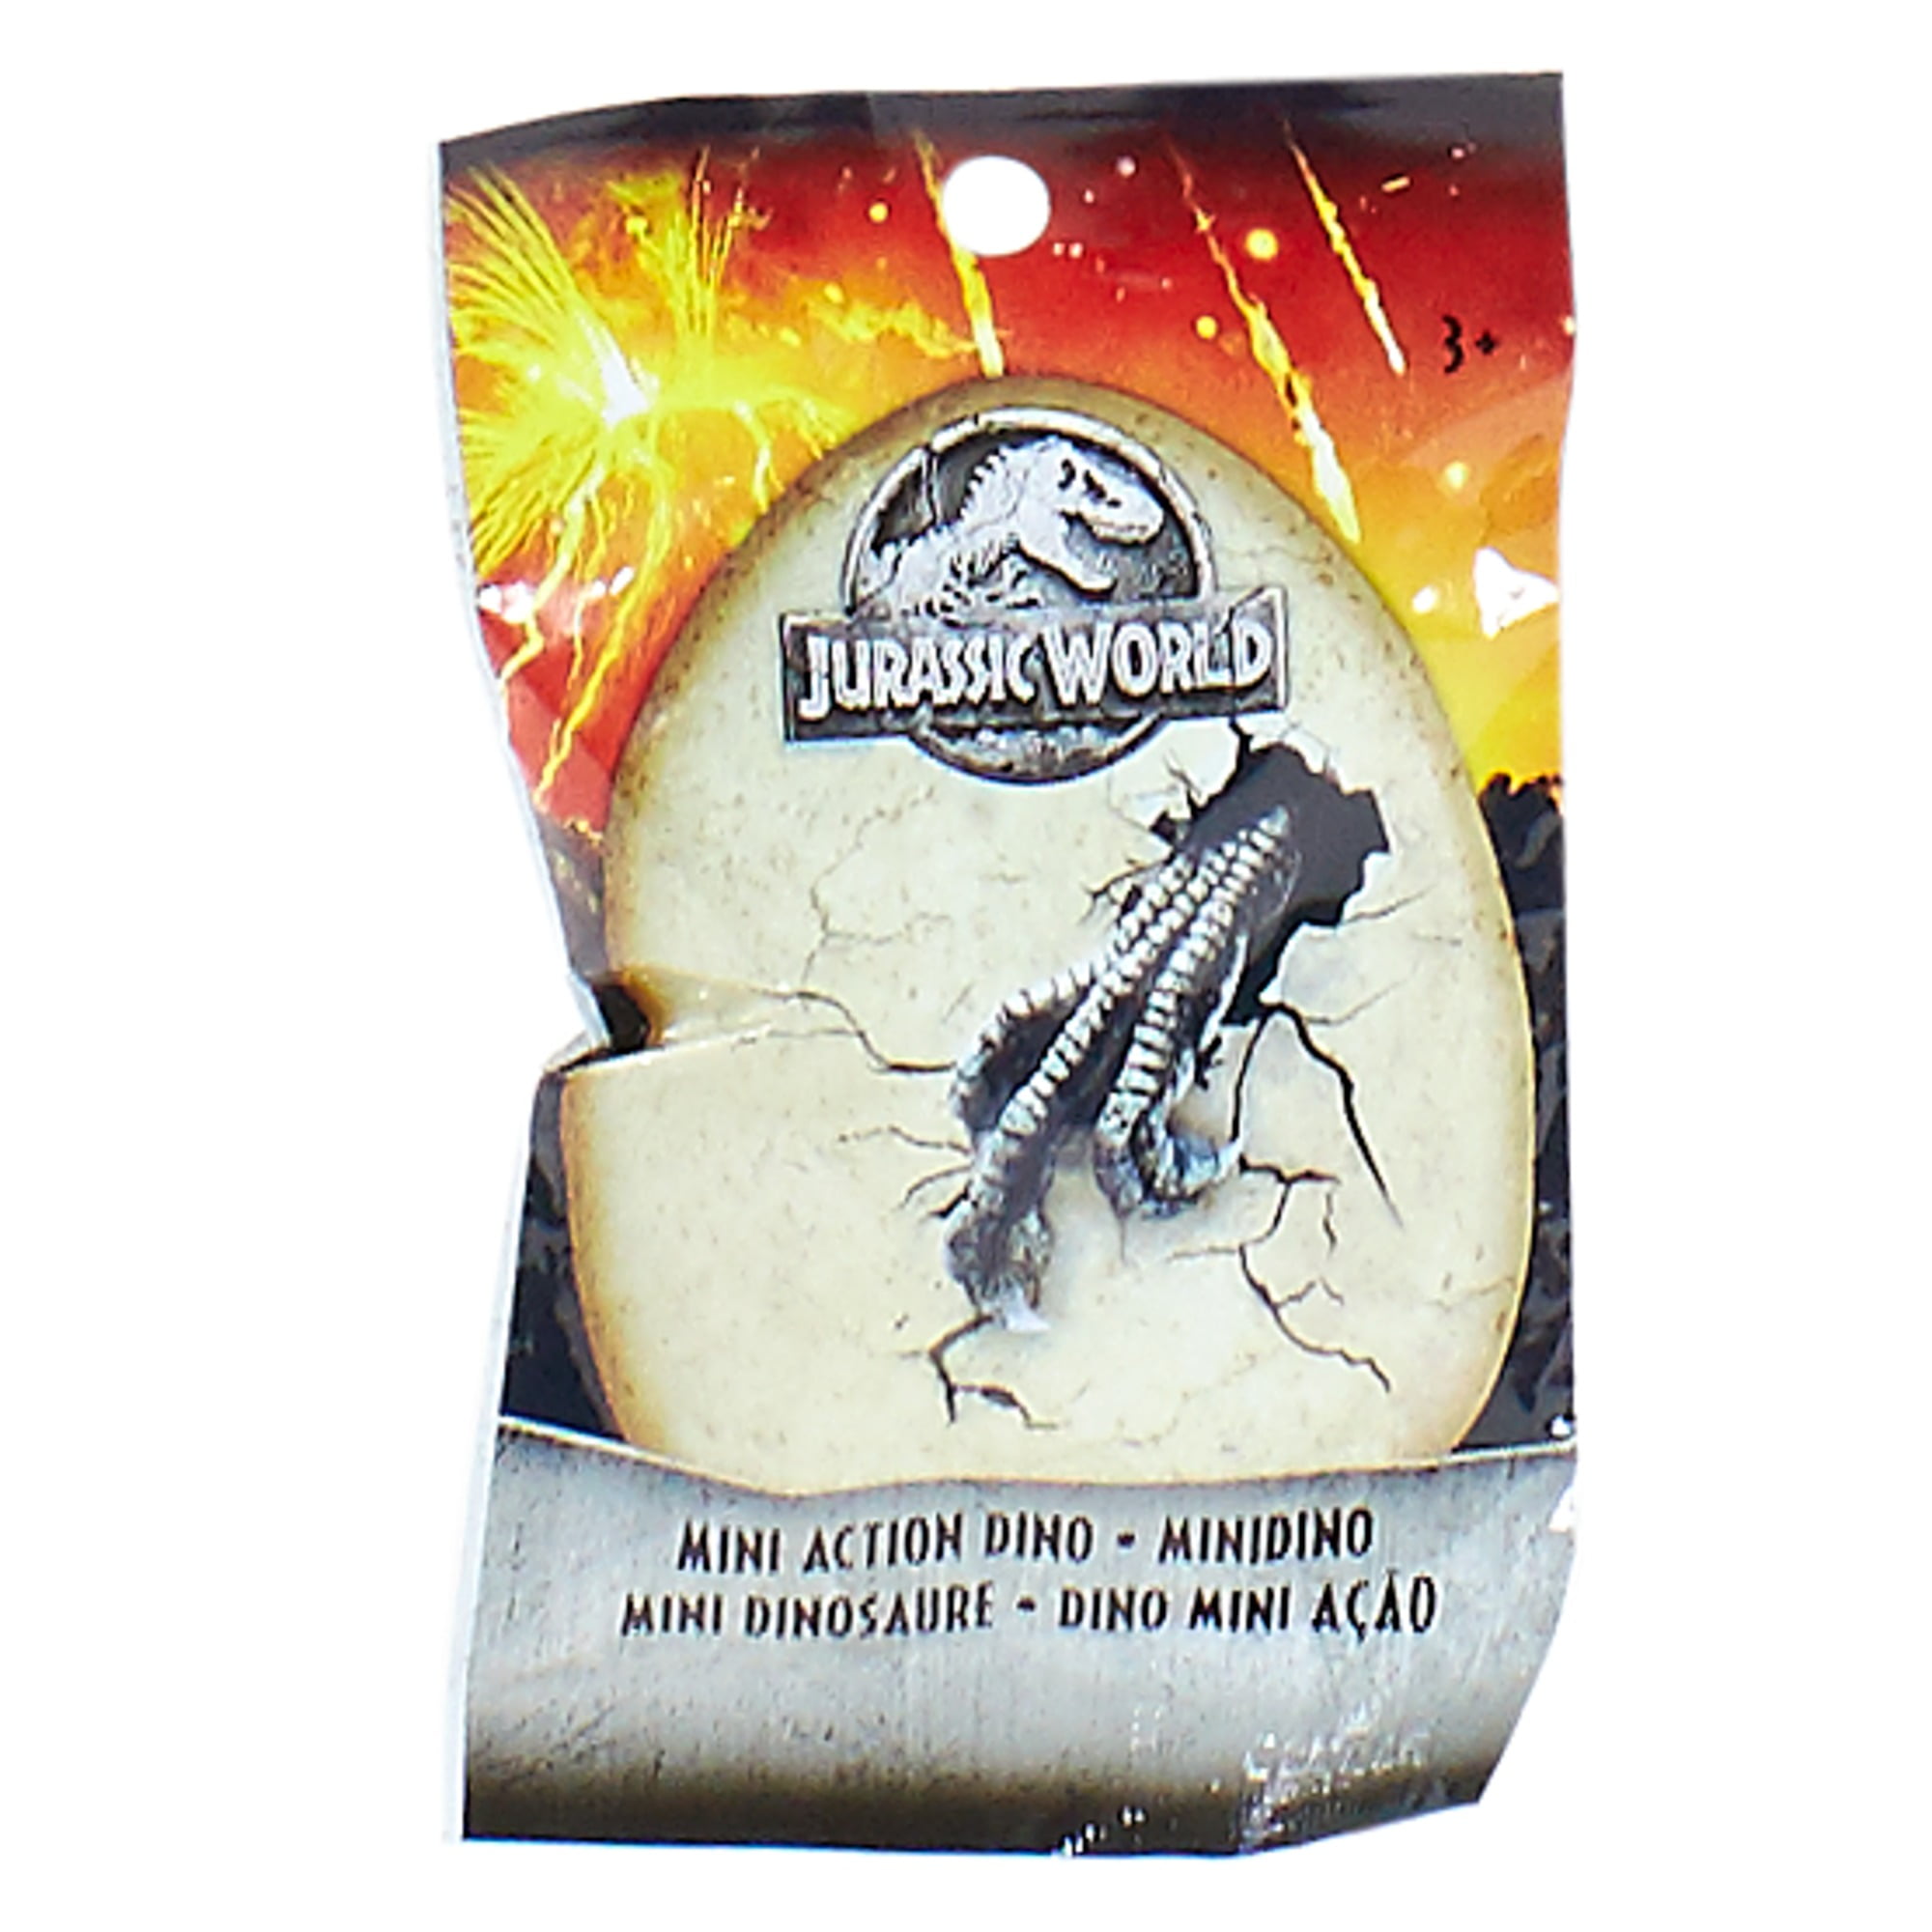 Blind Bag Mystery Figures New Lot of 6 Jurassic World Mini Action Dino 